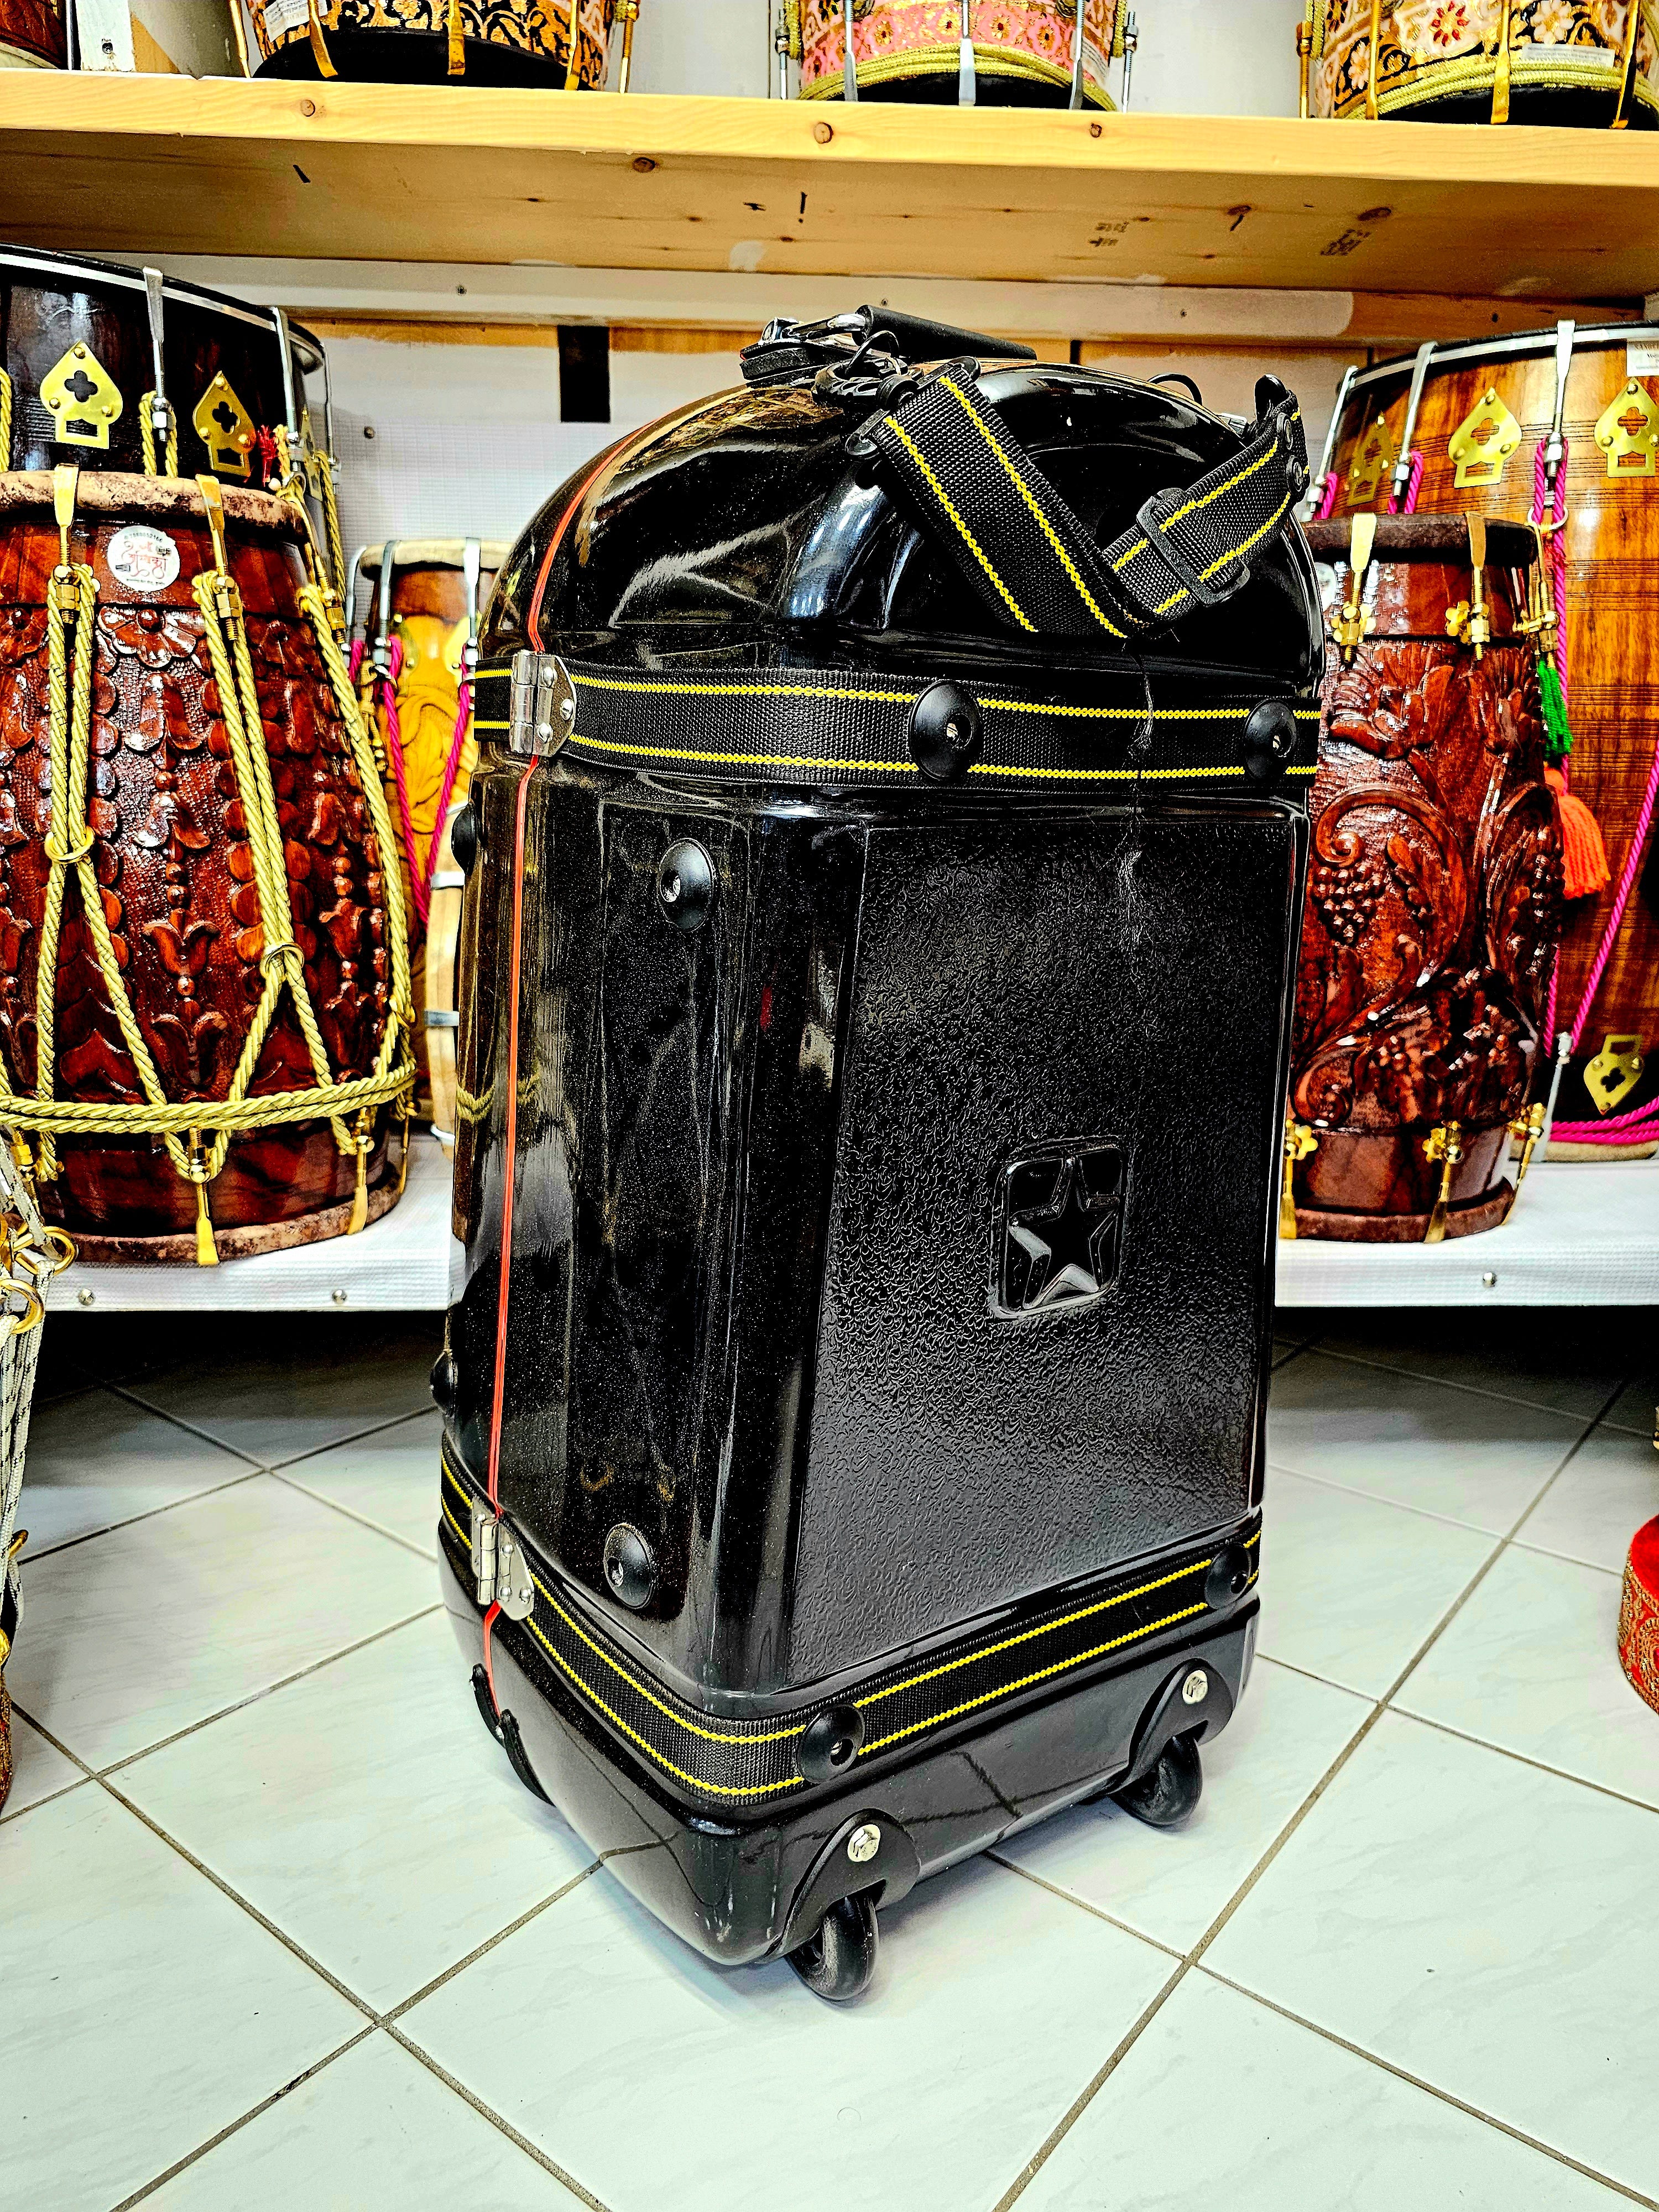 Rhythmic Roamer Tabla Traveler - A Black Hard Travel Case with Handle, Wheels, and Rich Red Felt Interior!